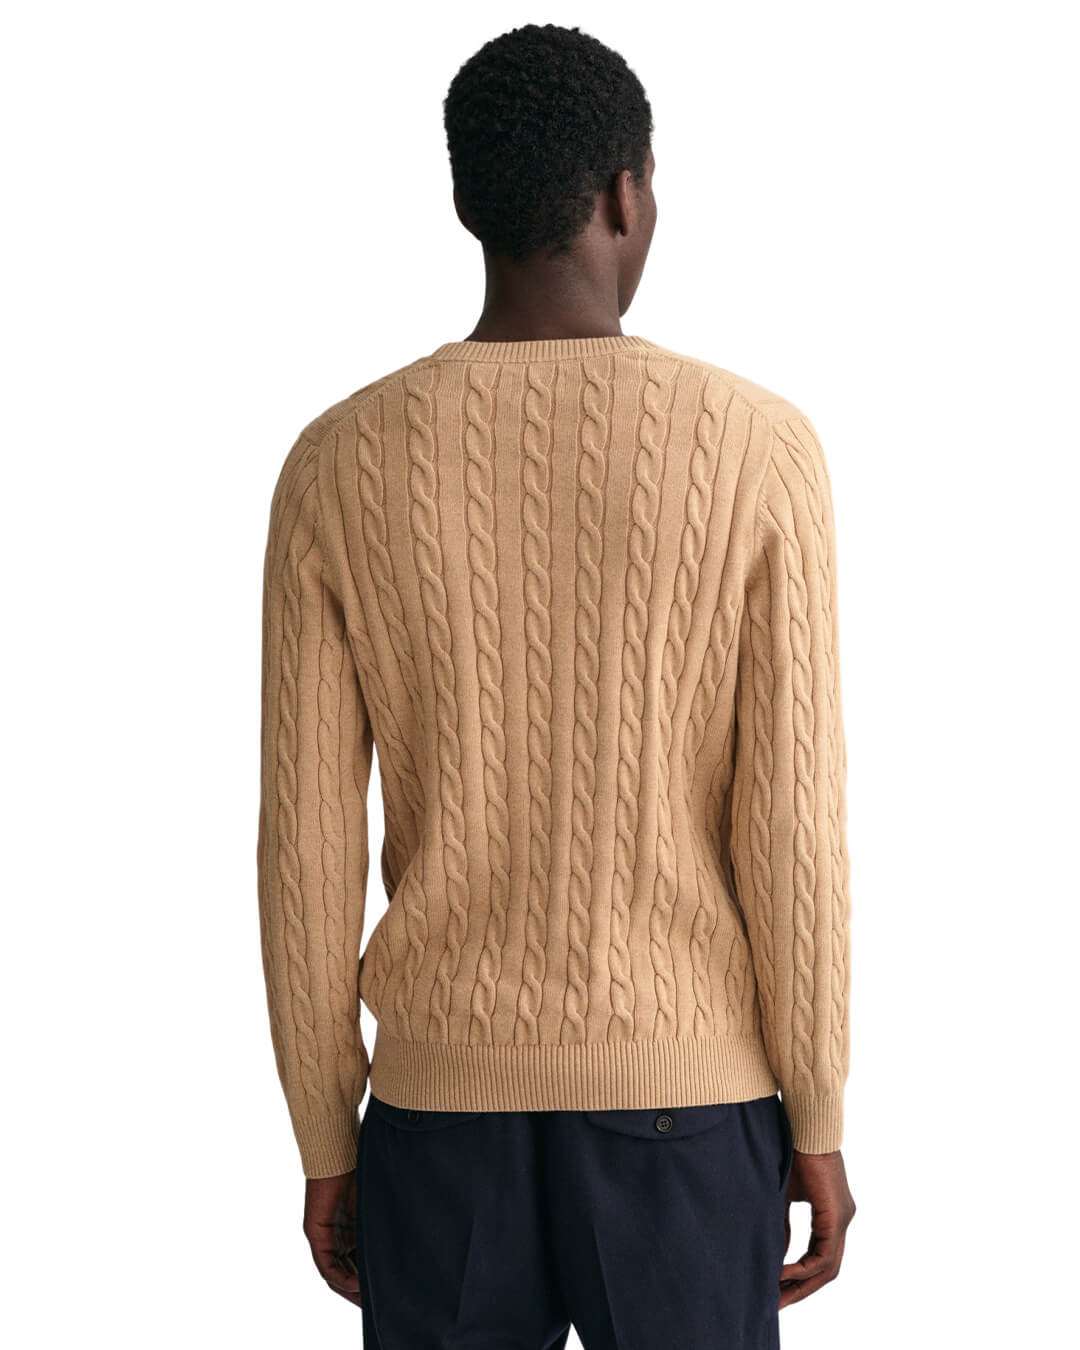 Gant Jumpers Gant Khaki Melange Cotton Cable Knit Crew Neck Sweater